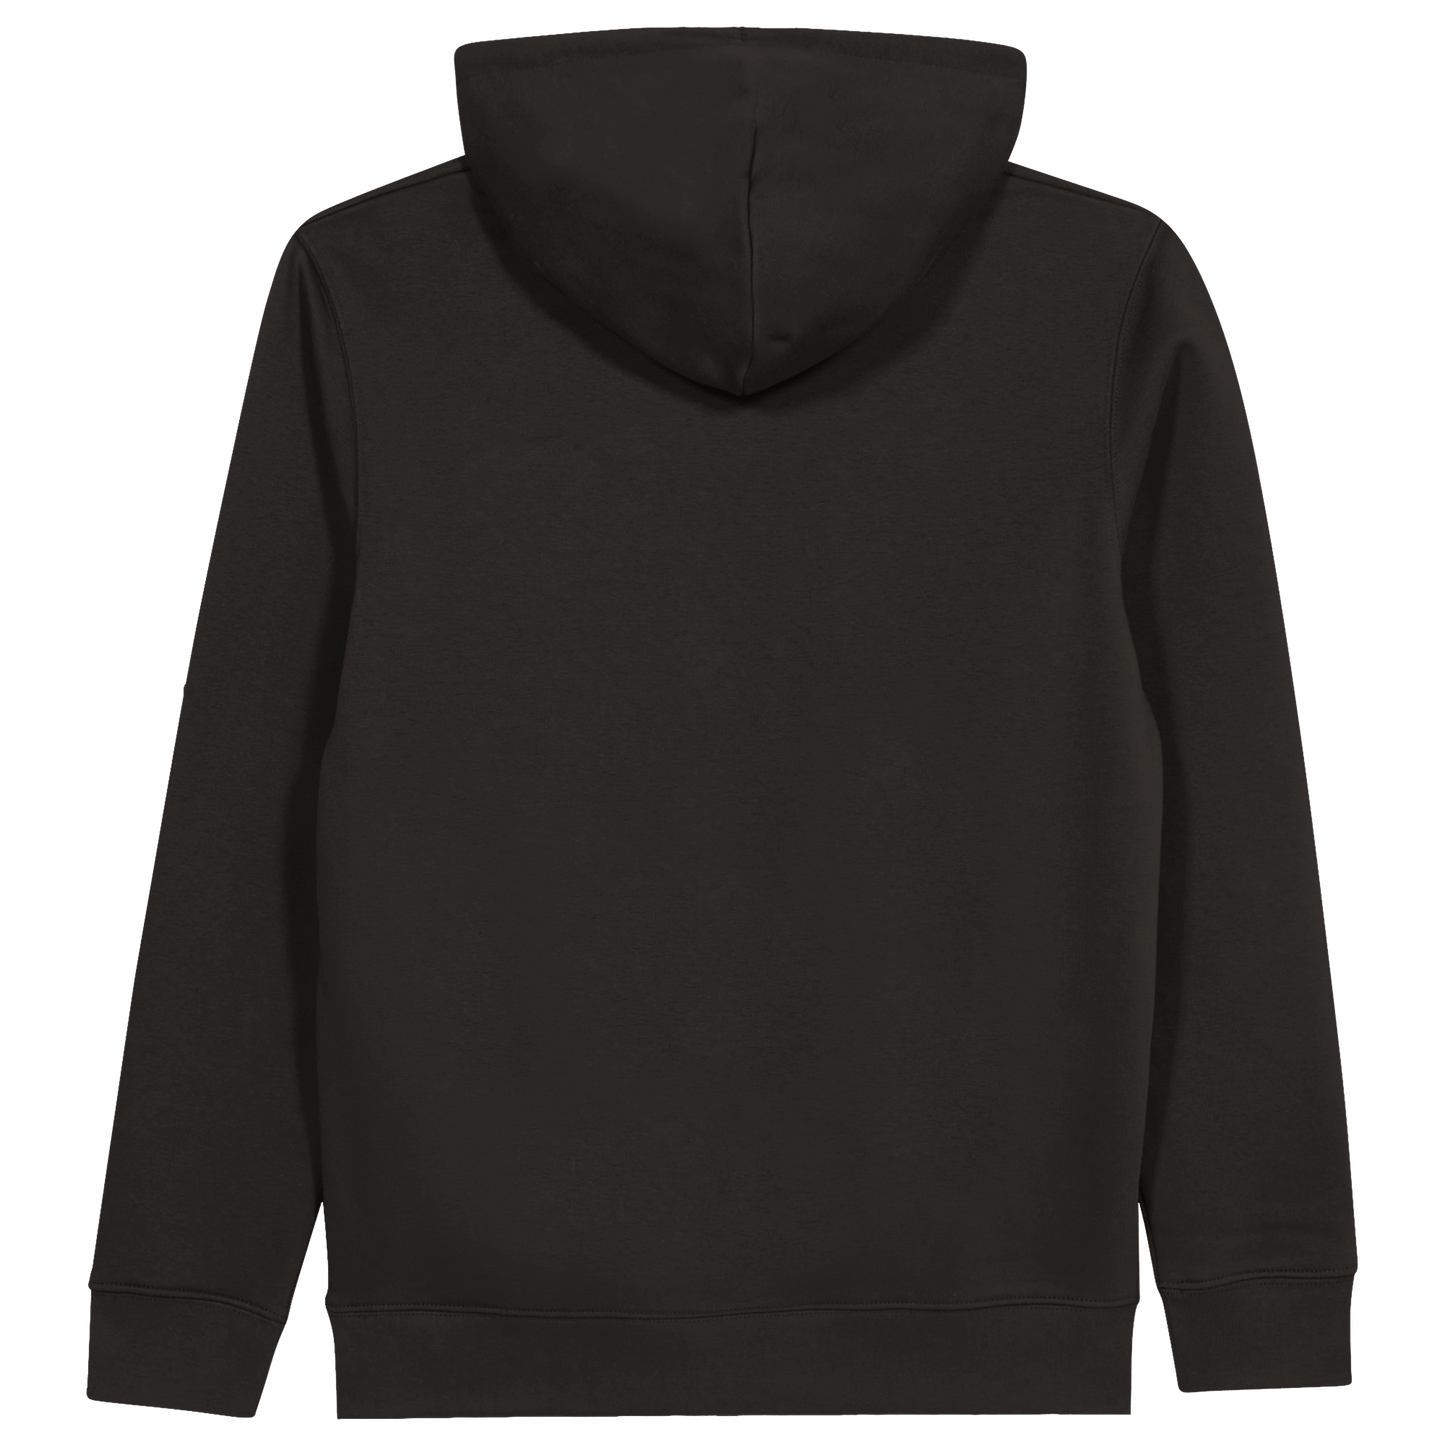 L.O.V.E - Organic Unisex Pullover Hoodie apparel